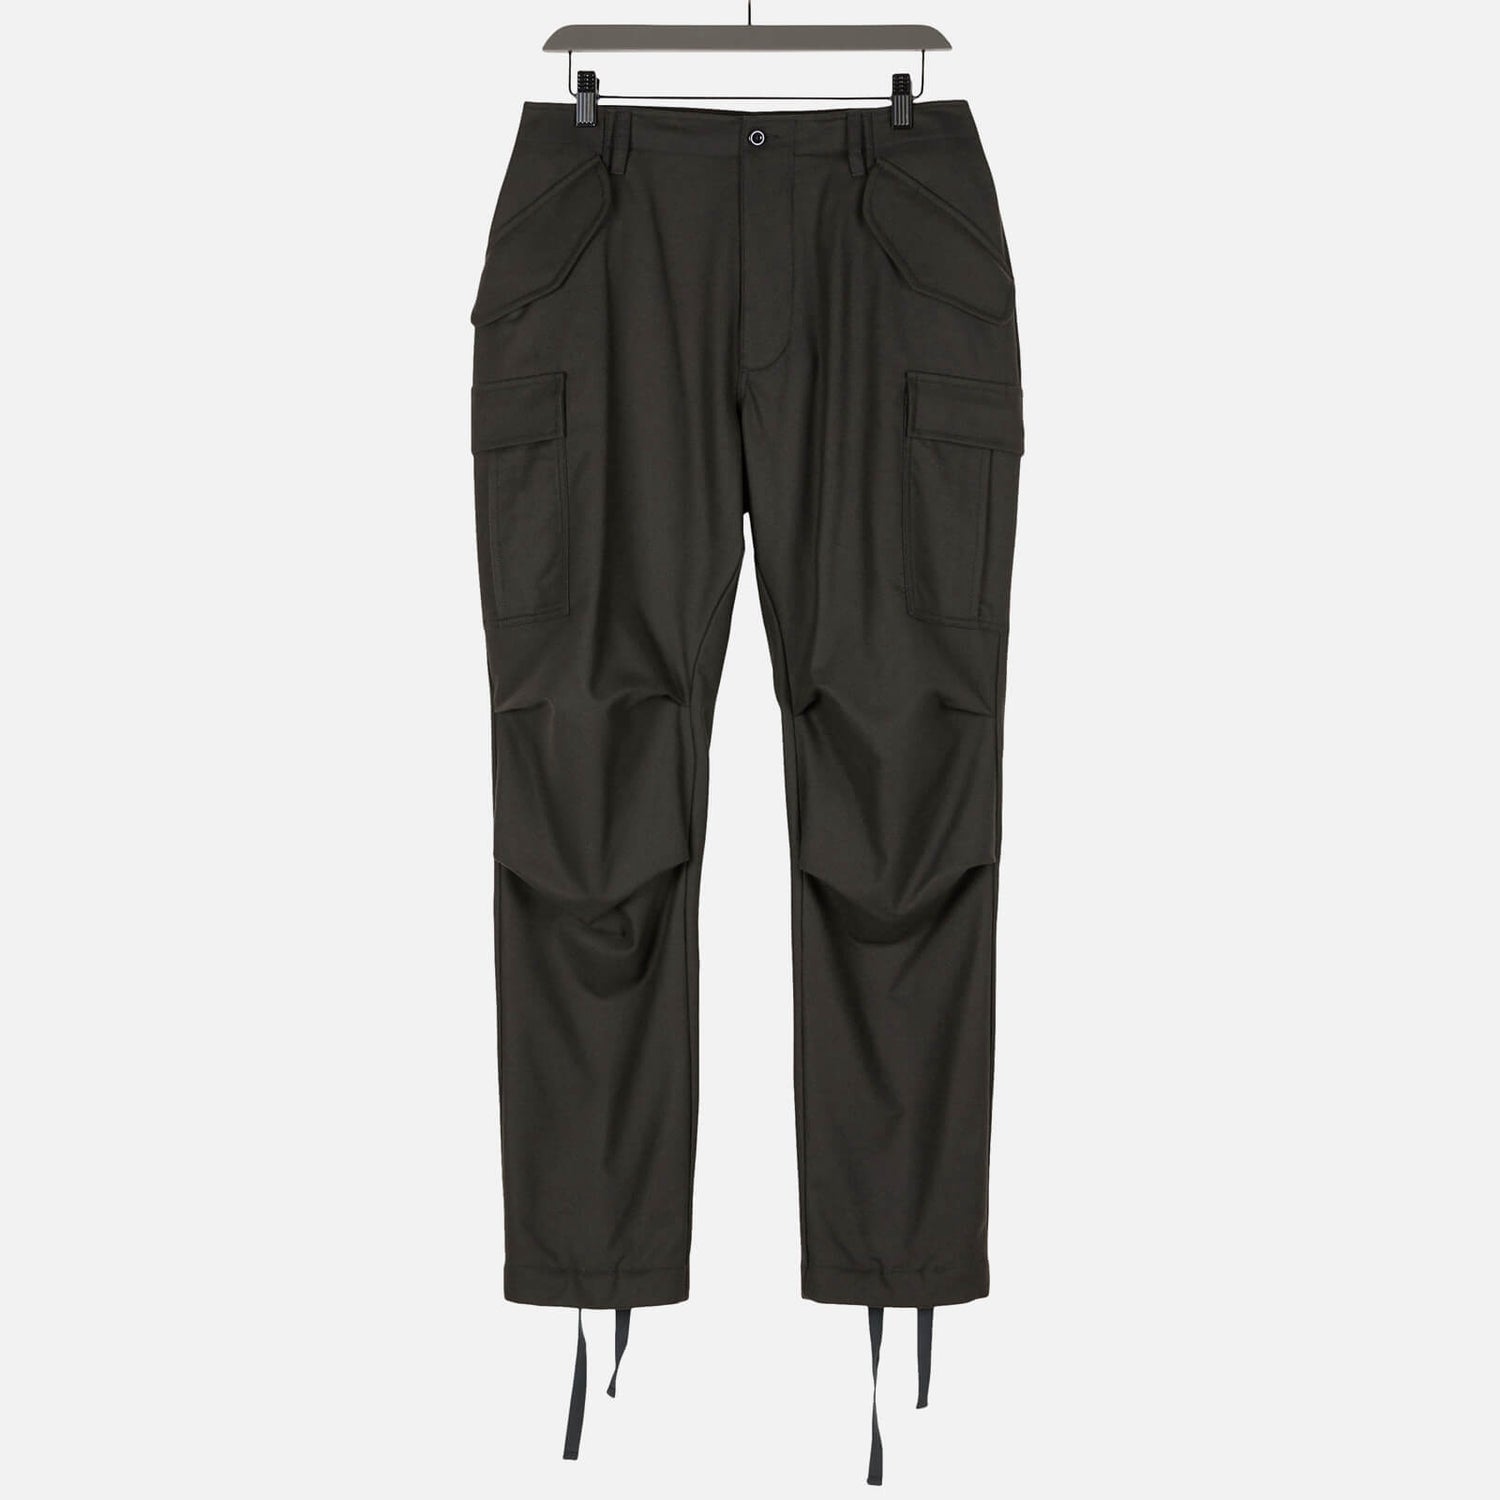 4SDesigns Men's Cargo Pants - Grey